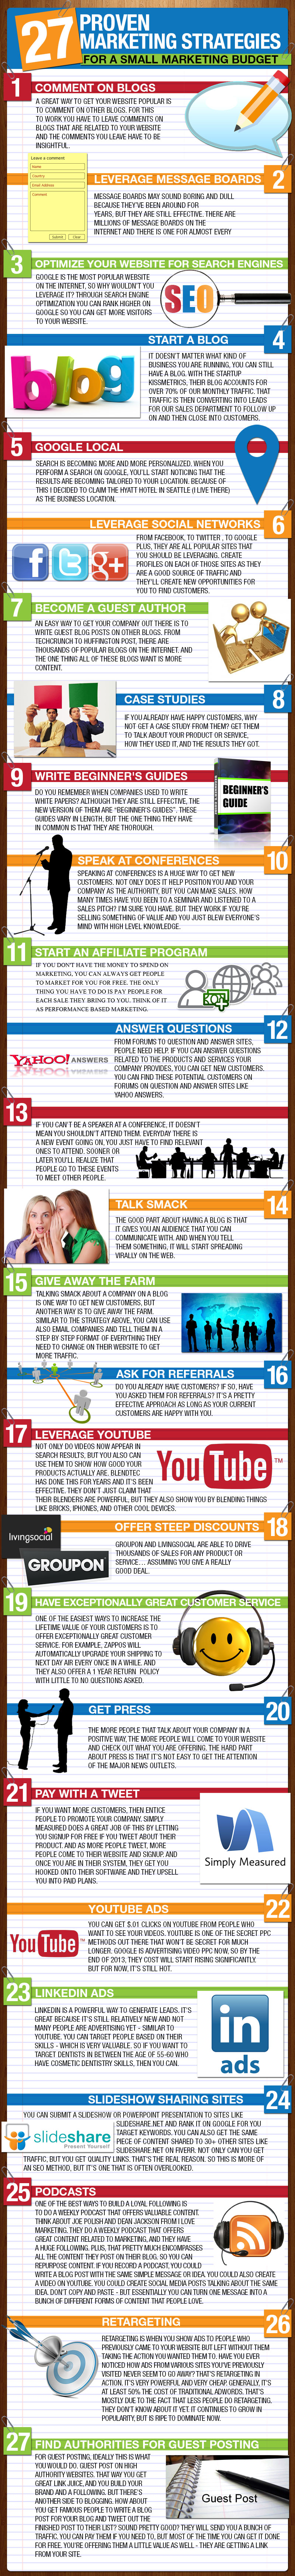 27-best-marketing-strategies-infographic